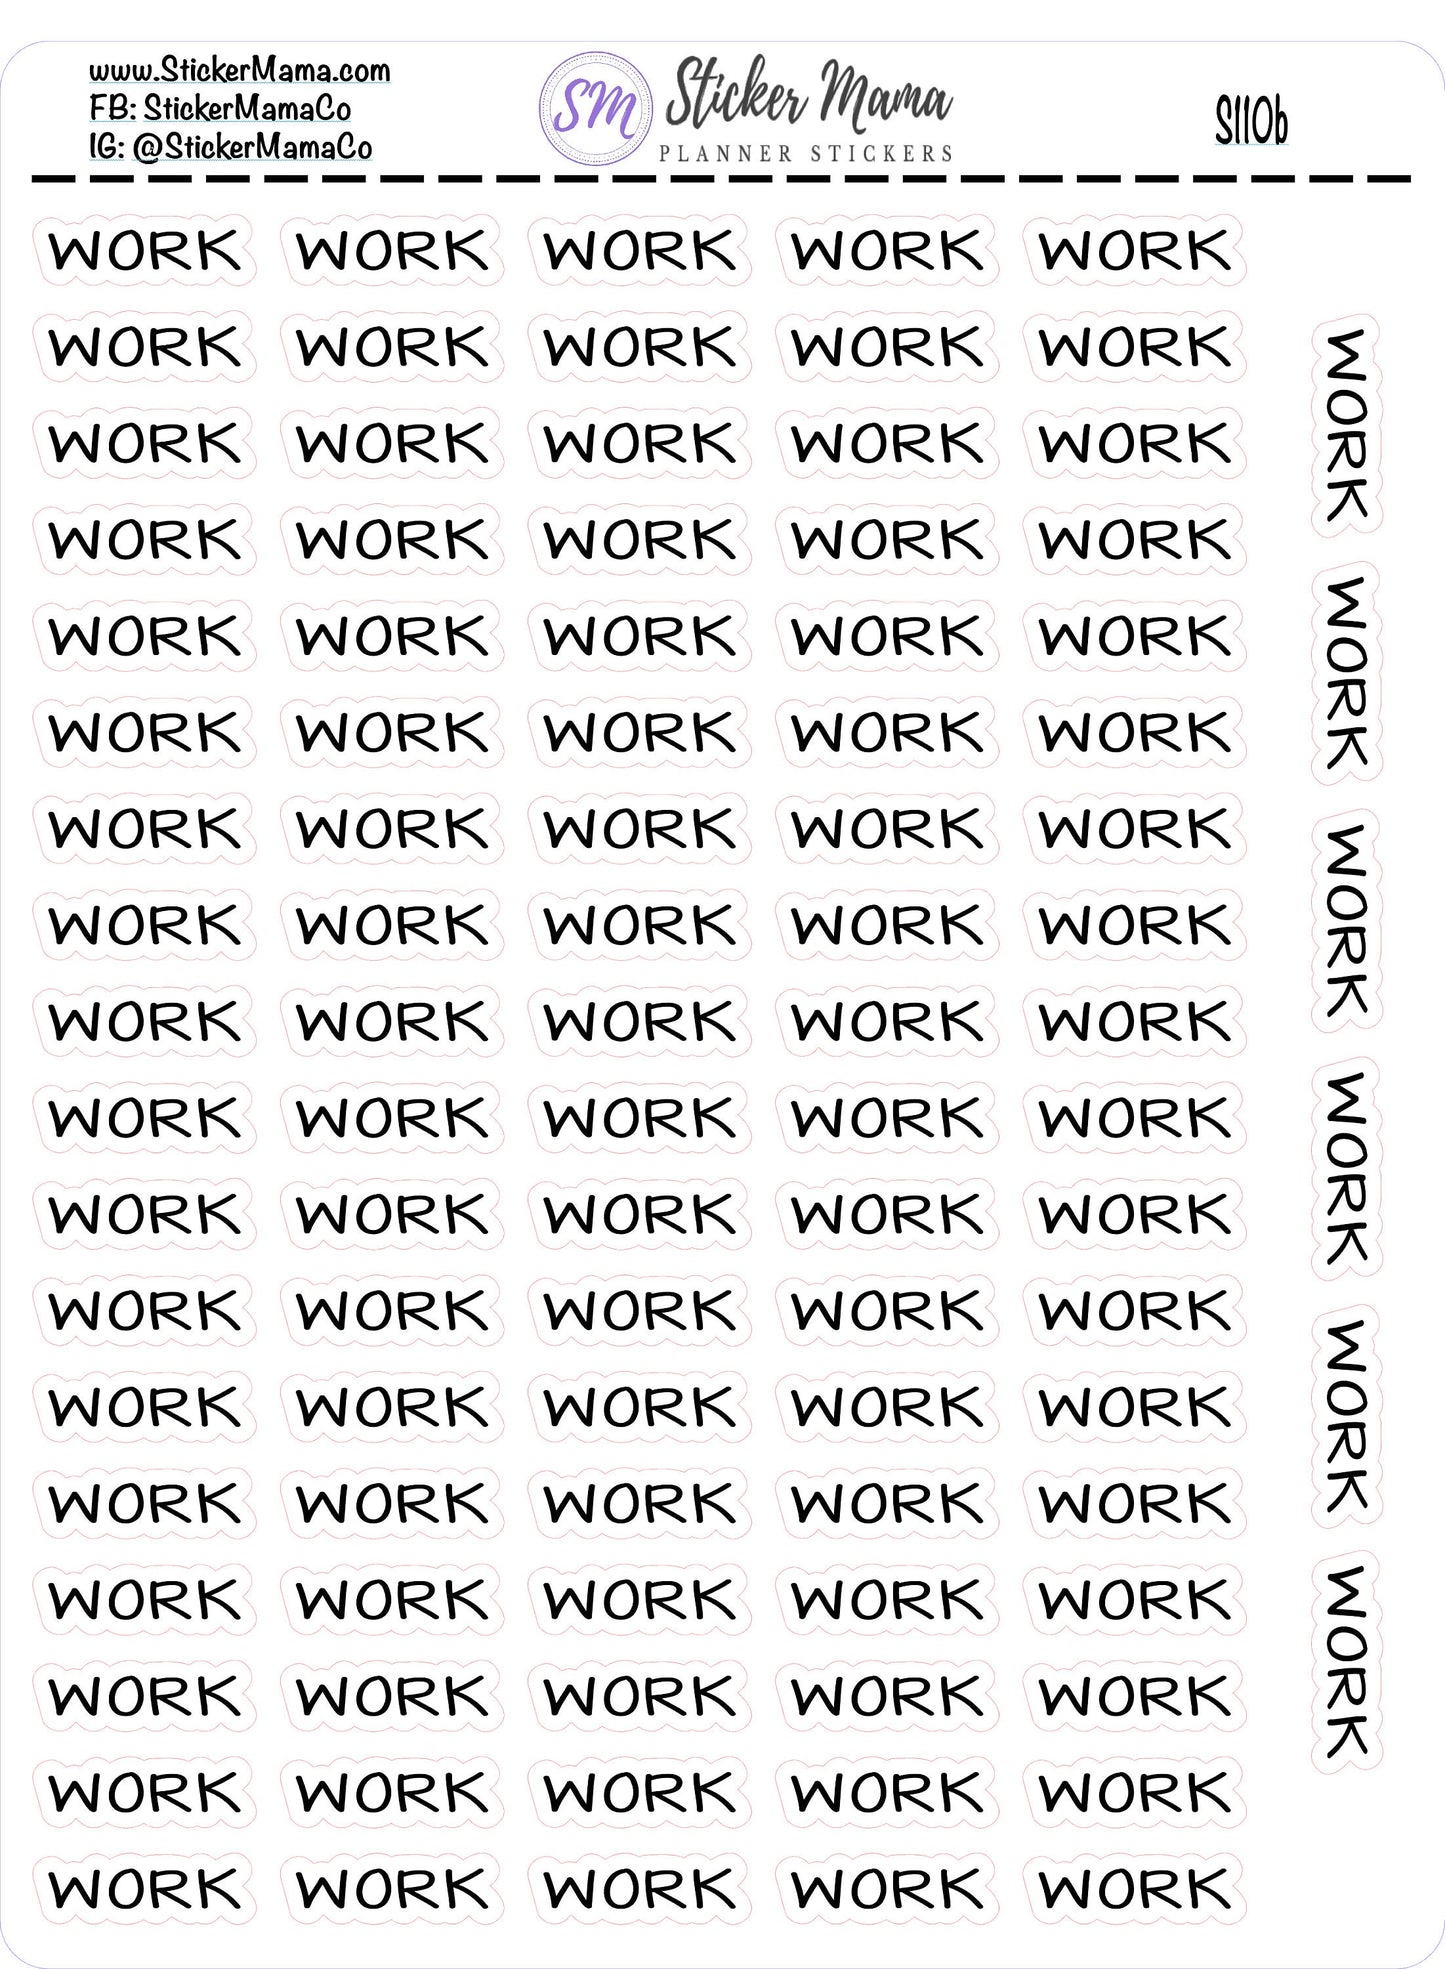 WORK SCRIPT PLANNER Stickers S110 JenPlans Script Font Planner Stickers For Work Planner Stickers Go to Work Sticker